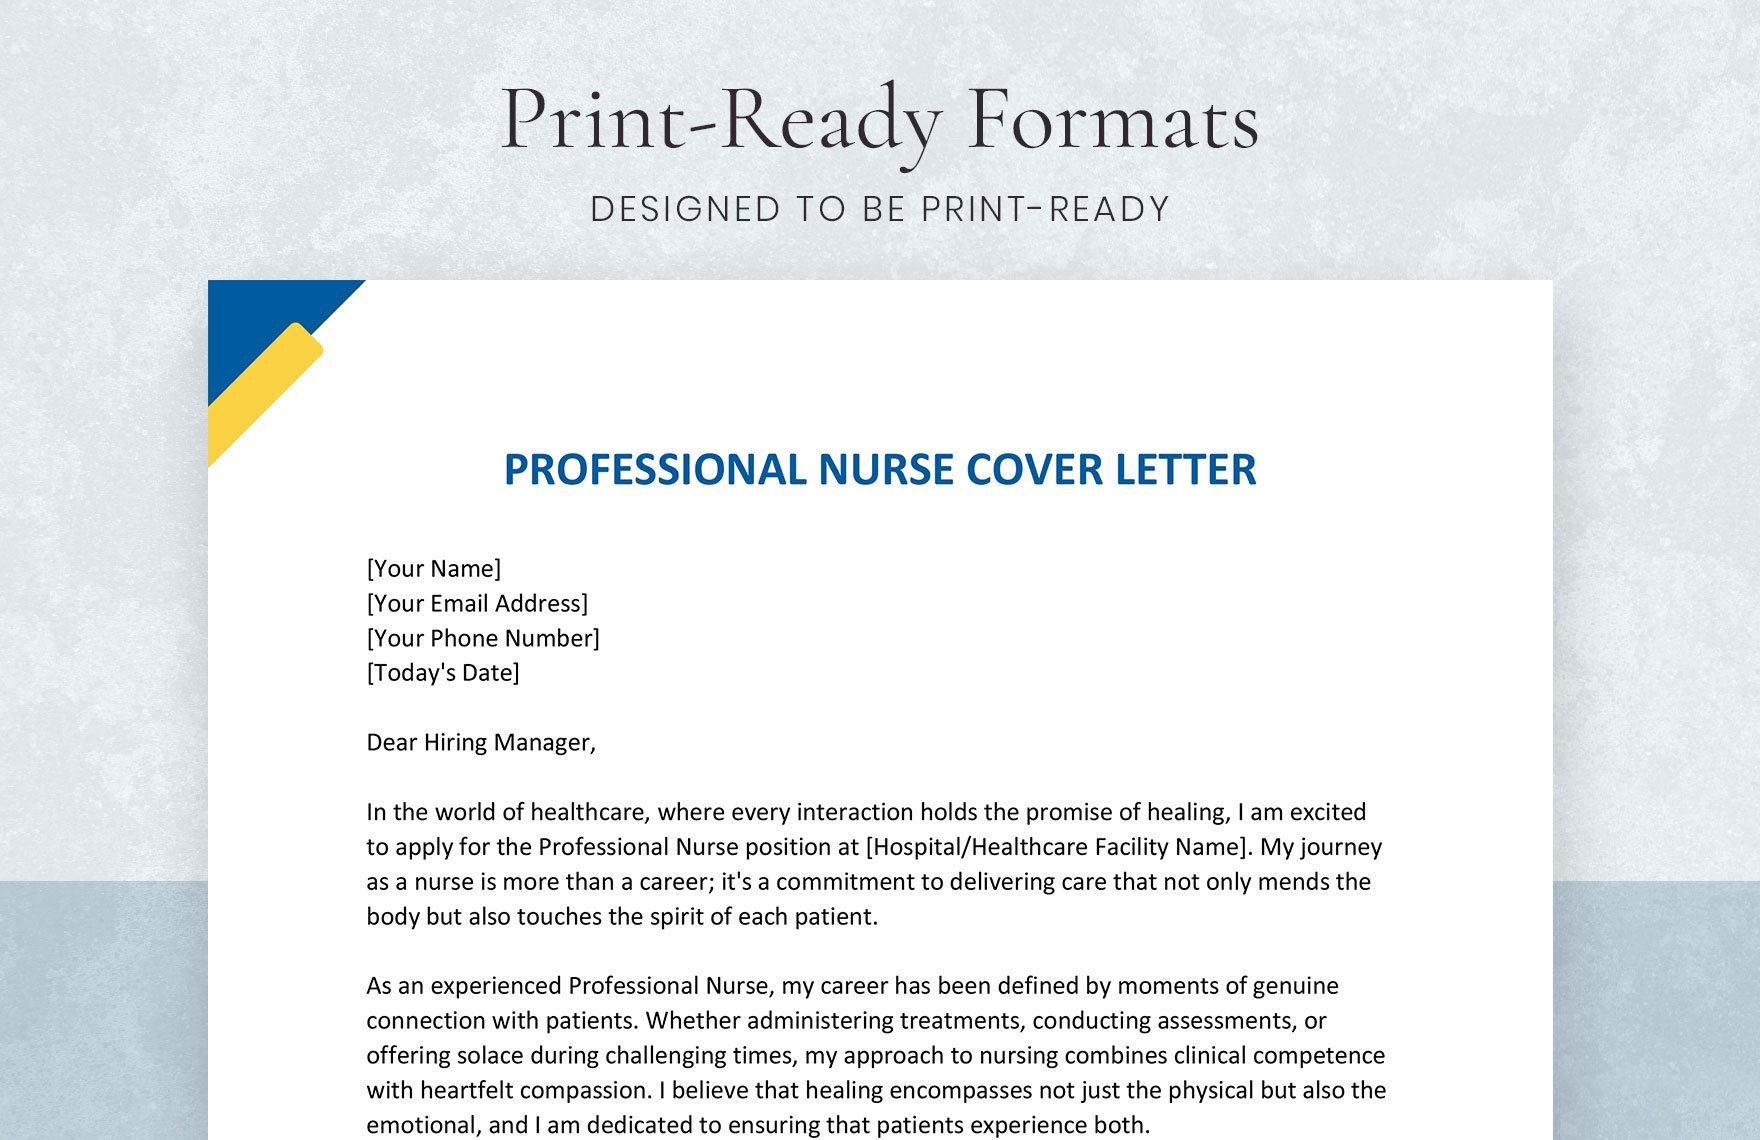 Professional Nurse Cover Letter